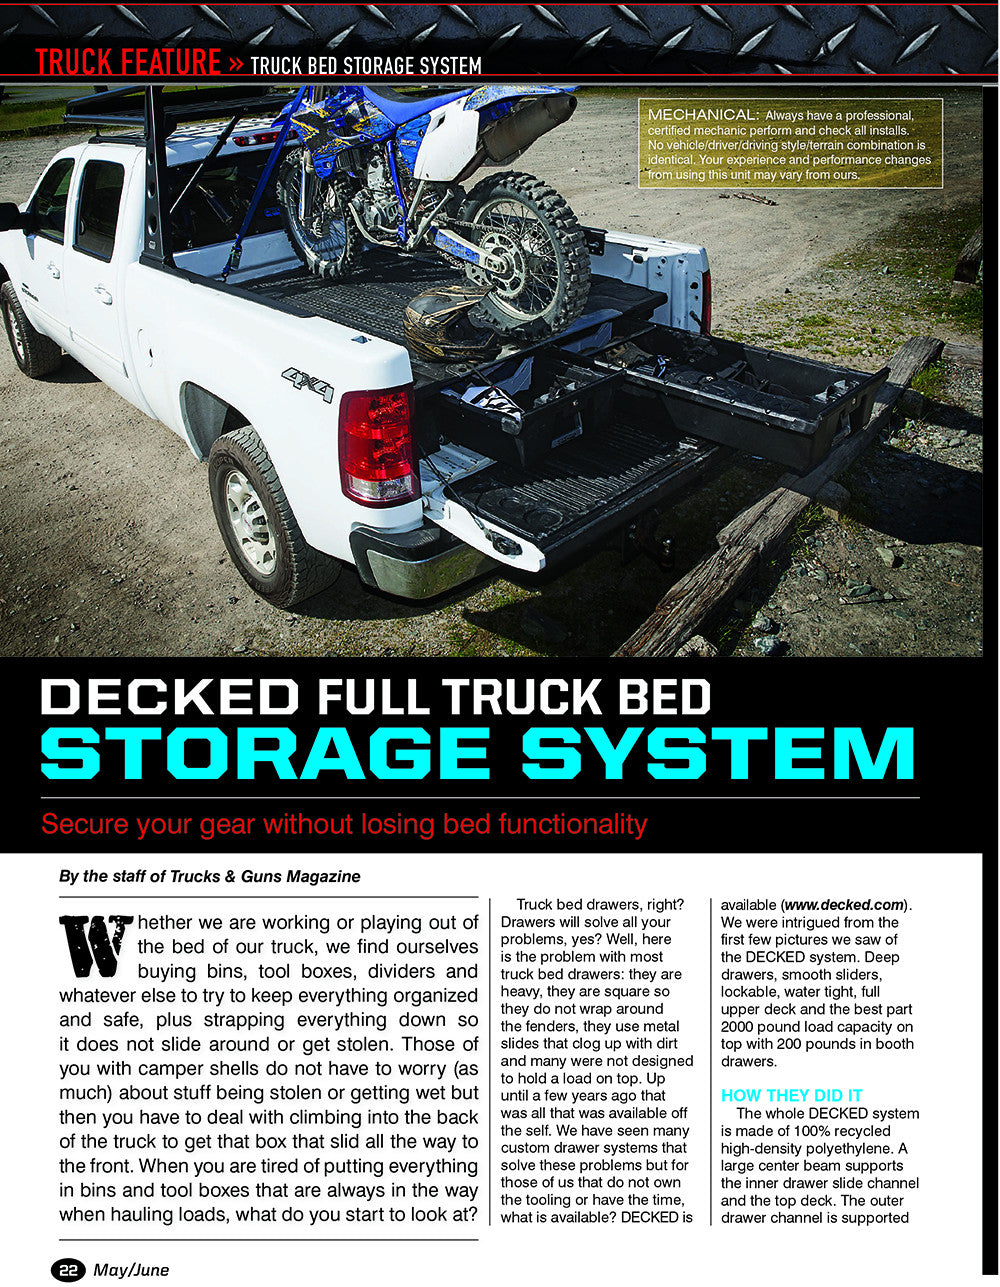 Trucks & Guns Magazine: DECKED Install